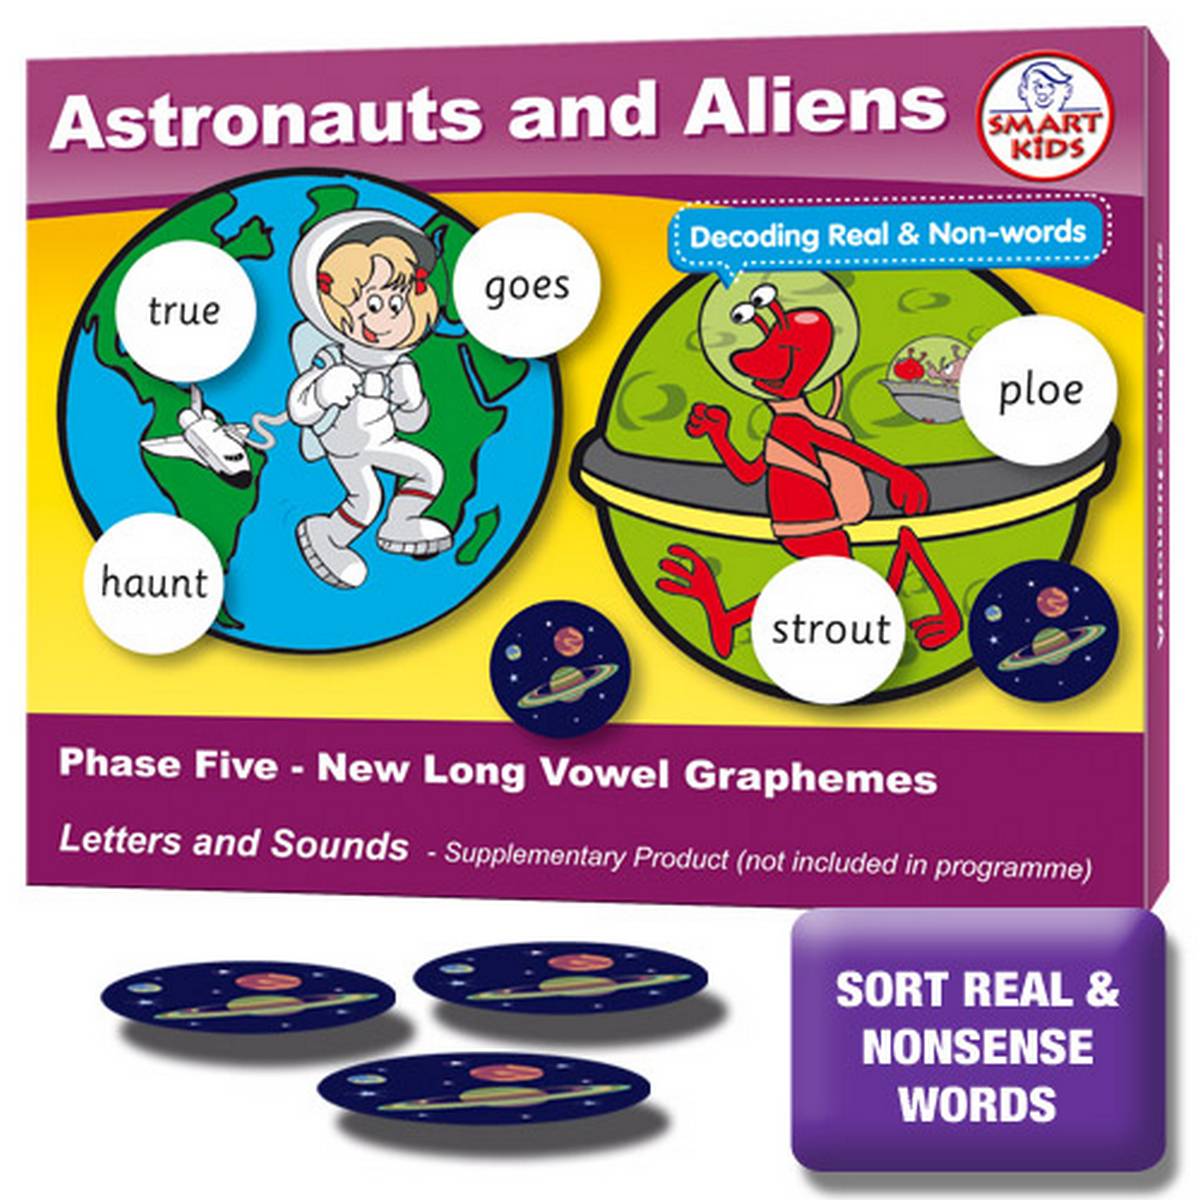 Astronauts and Aliens Long Vowel Graphemes